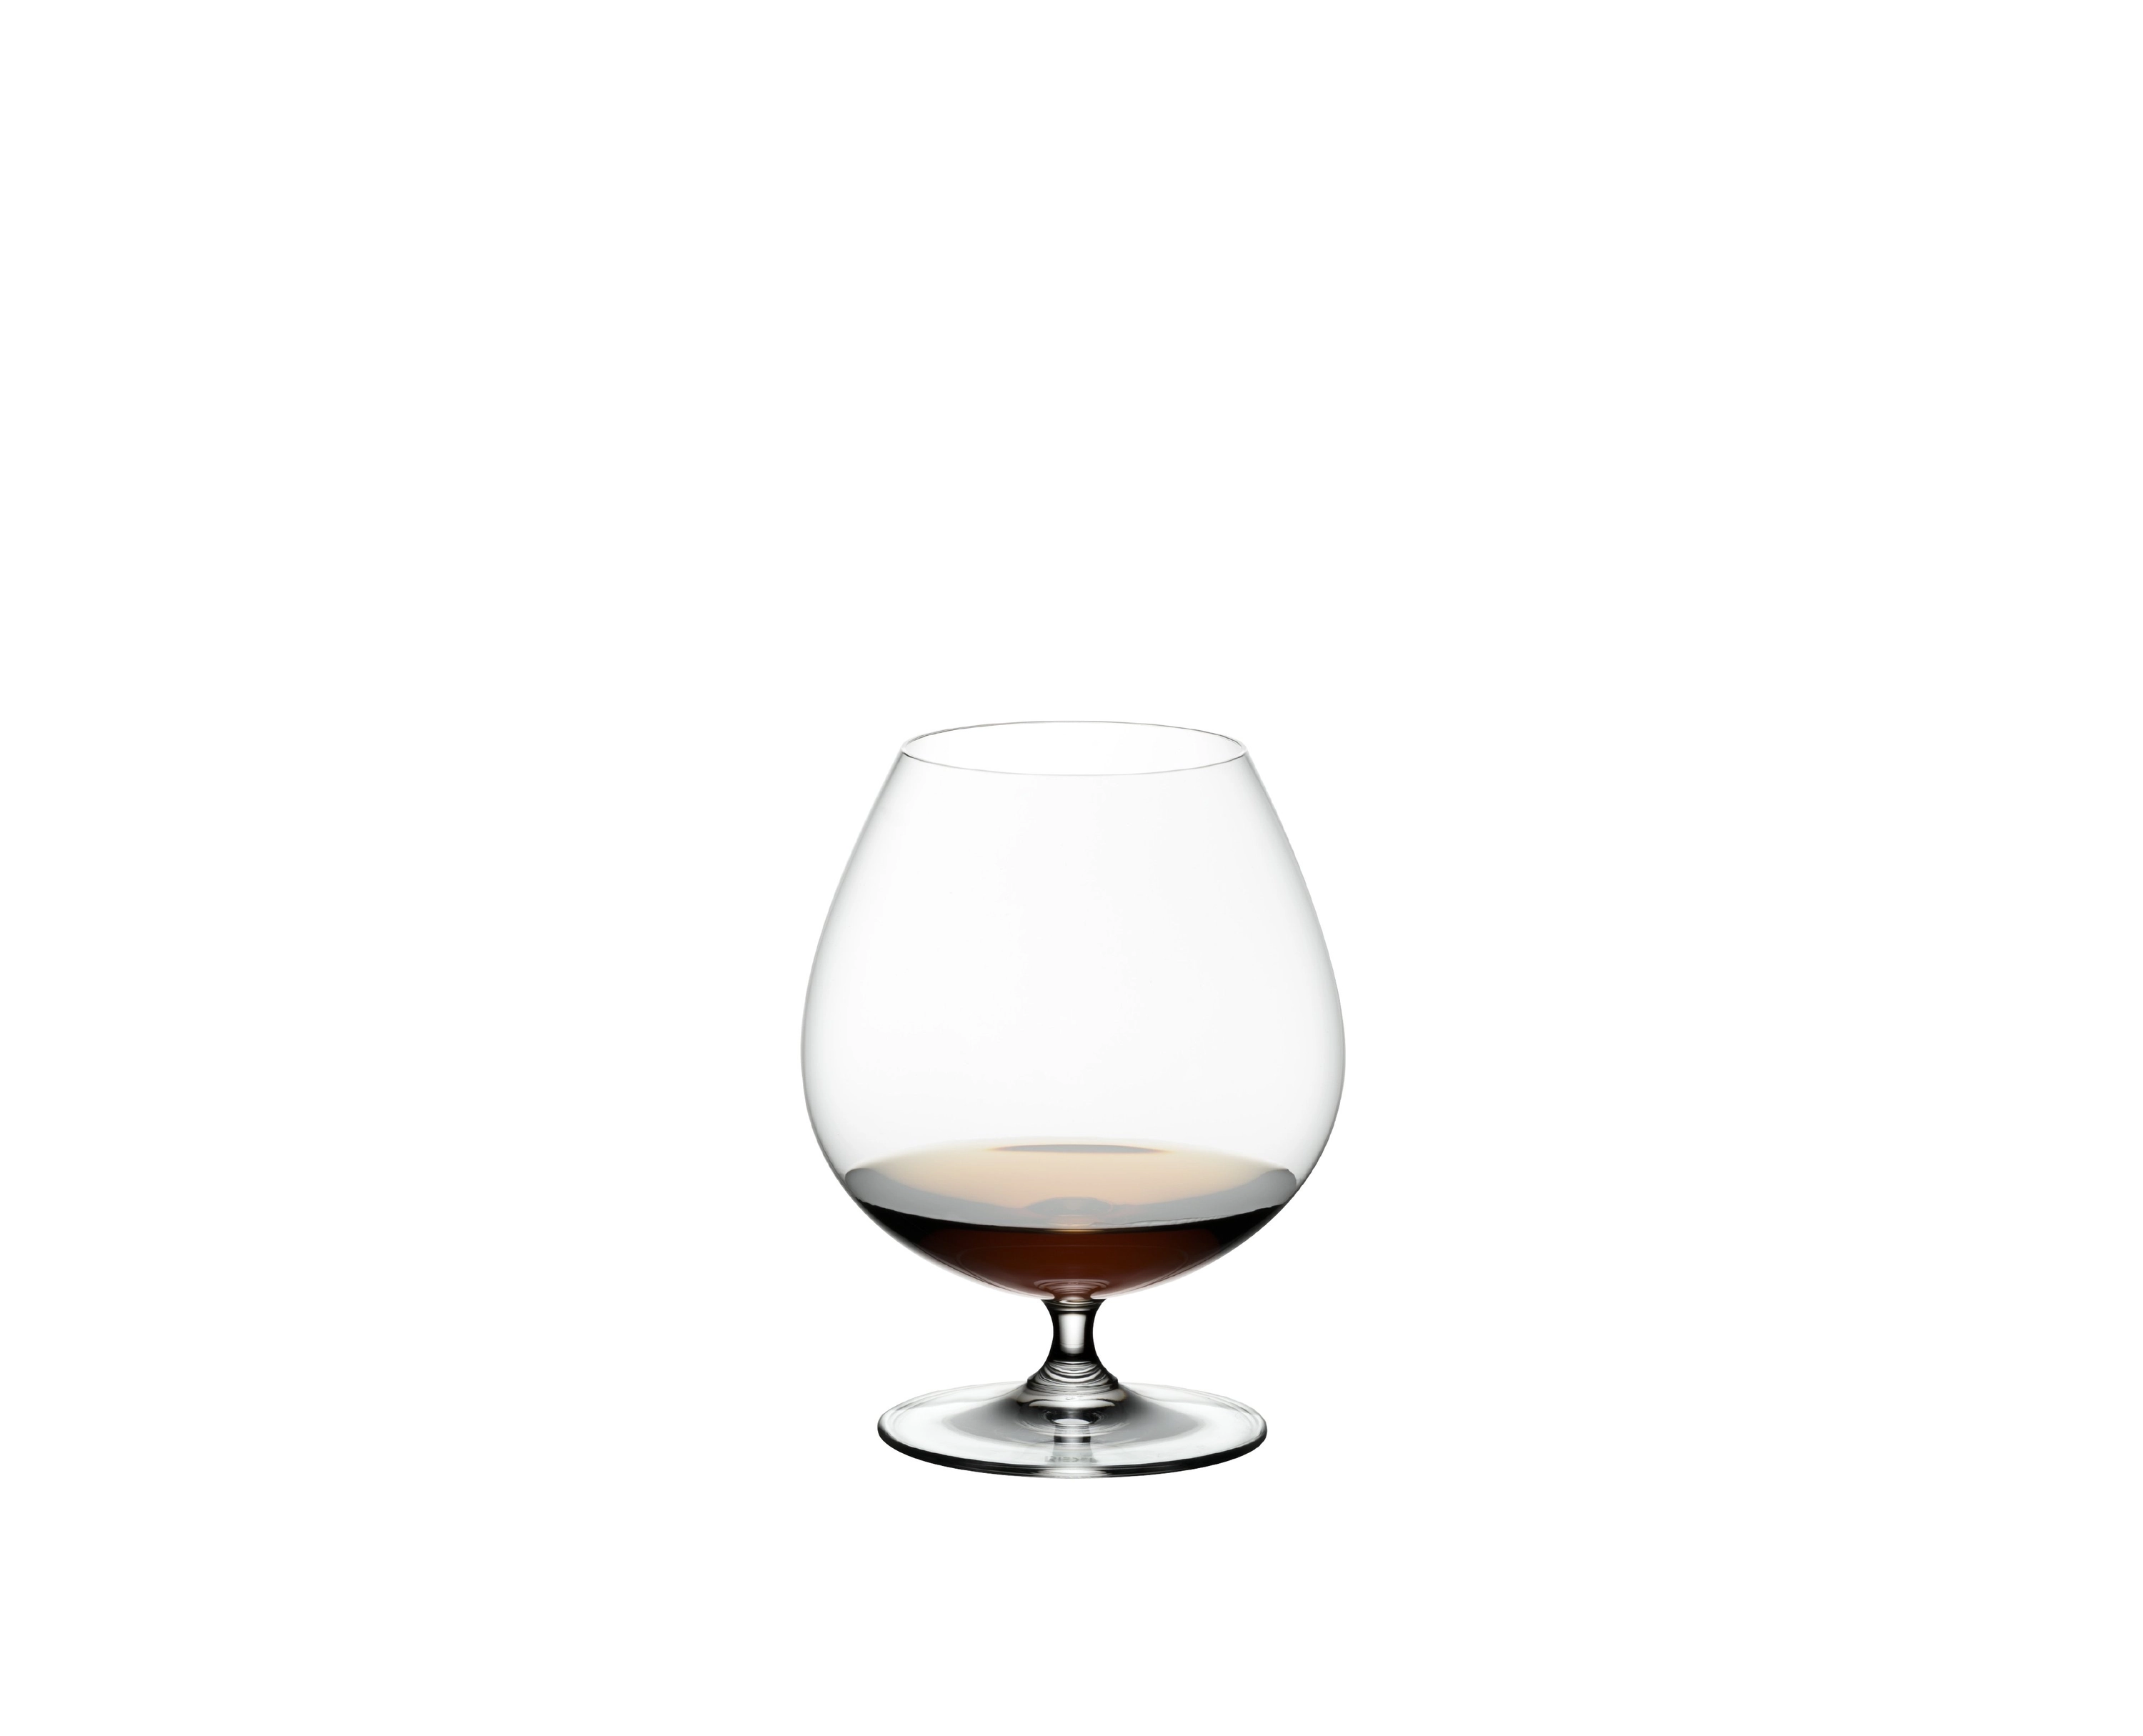 Riedel Vinum Brandy Glass, Set of 2 glasses